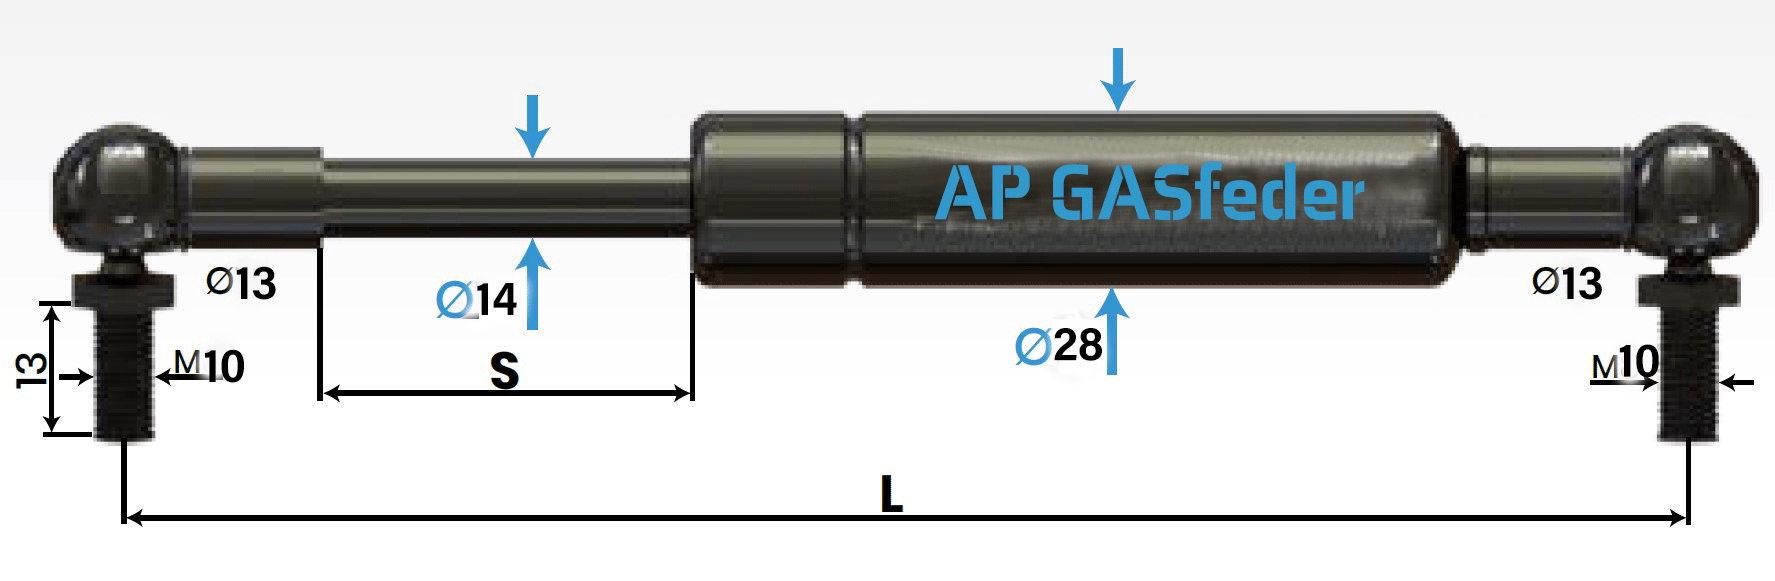 Imagen de AP GASfeder 1000N, 14/28, Hub(S): 500 mm, Länge (L): 1135 mm,  Alternatvie SRST.2394LH